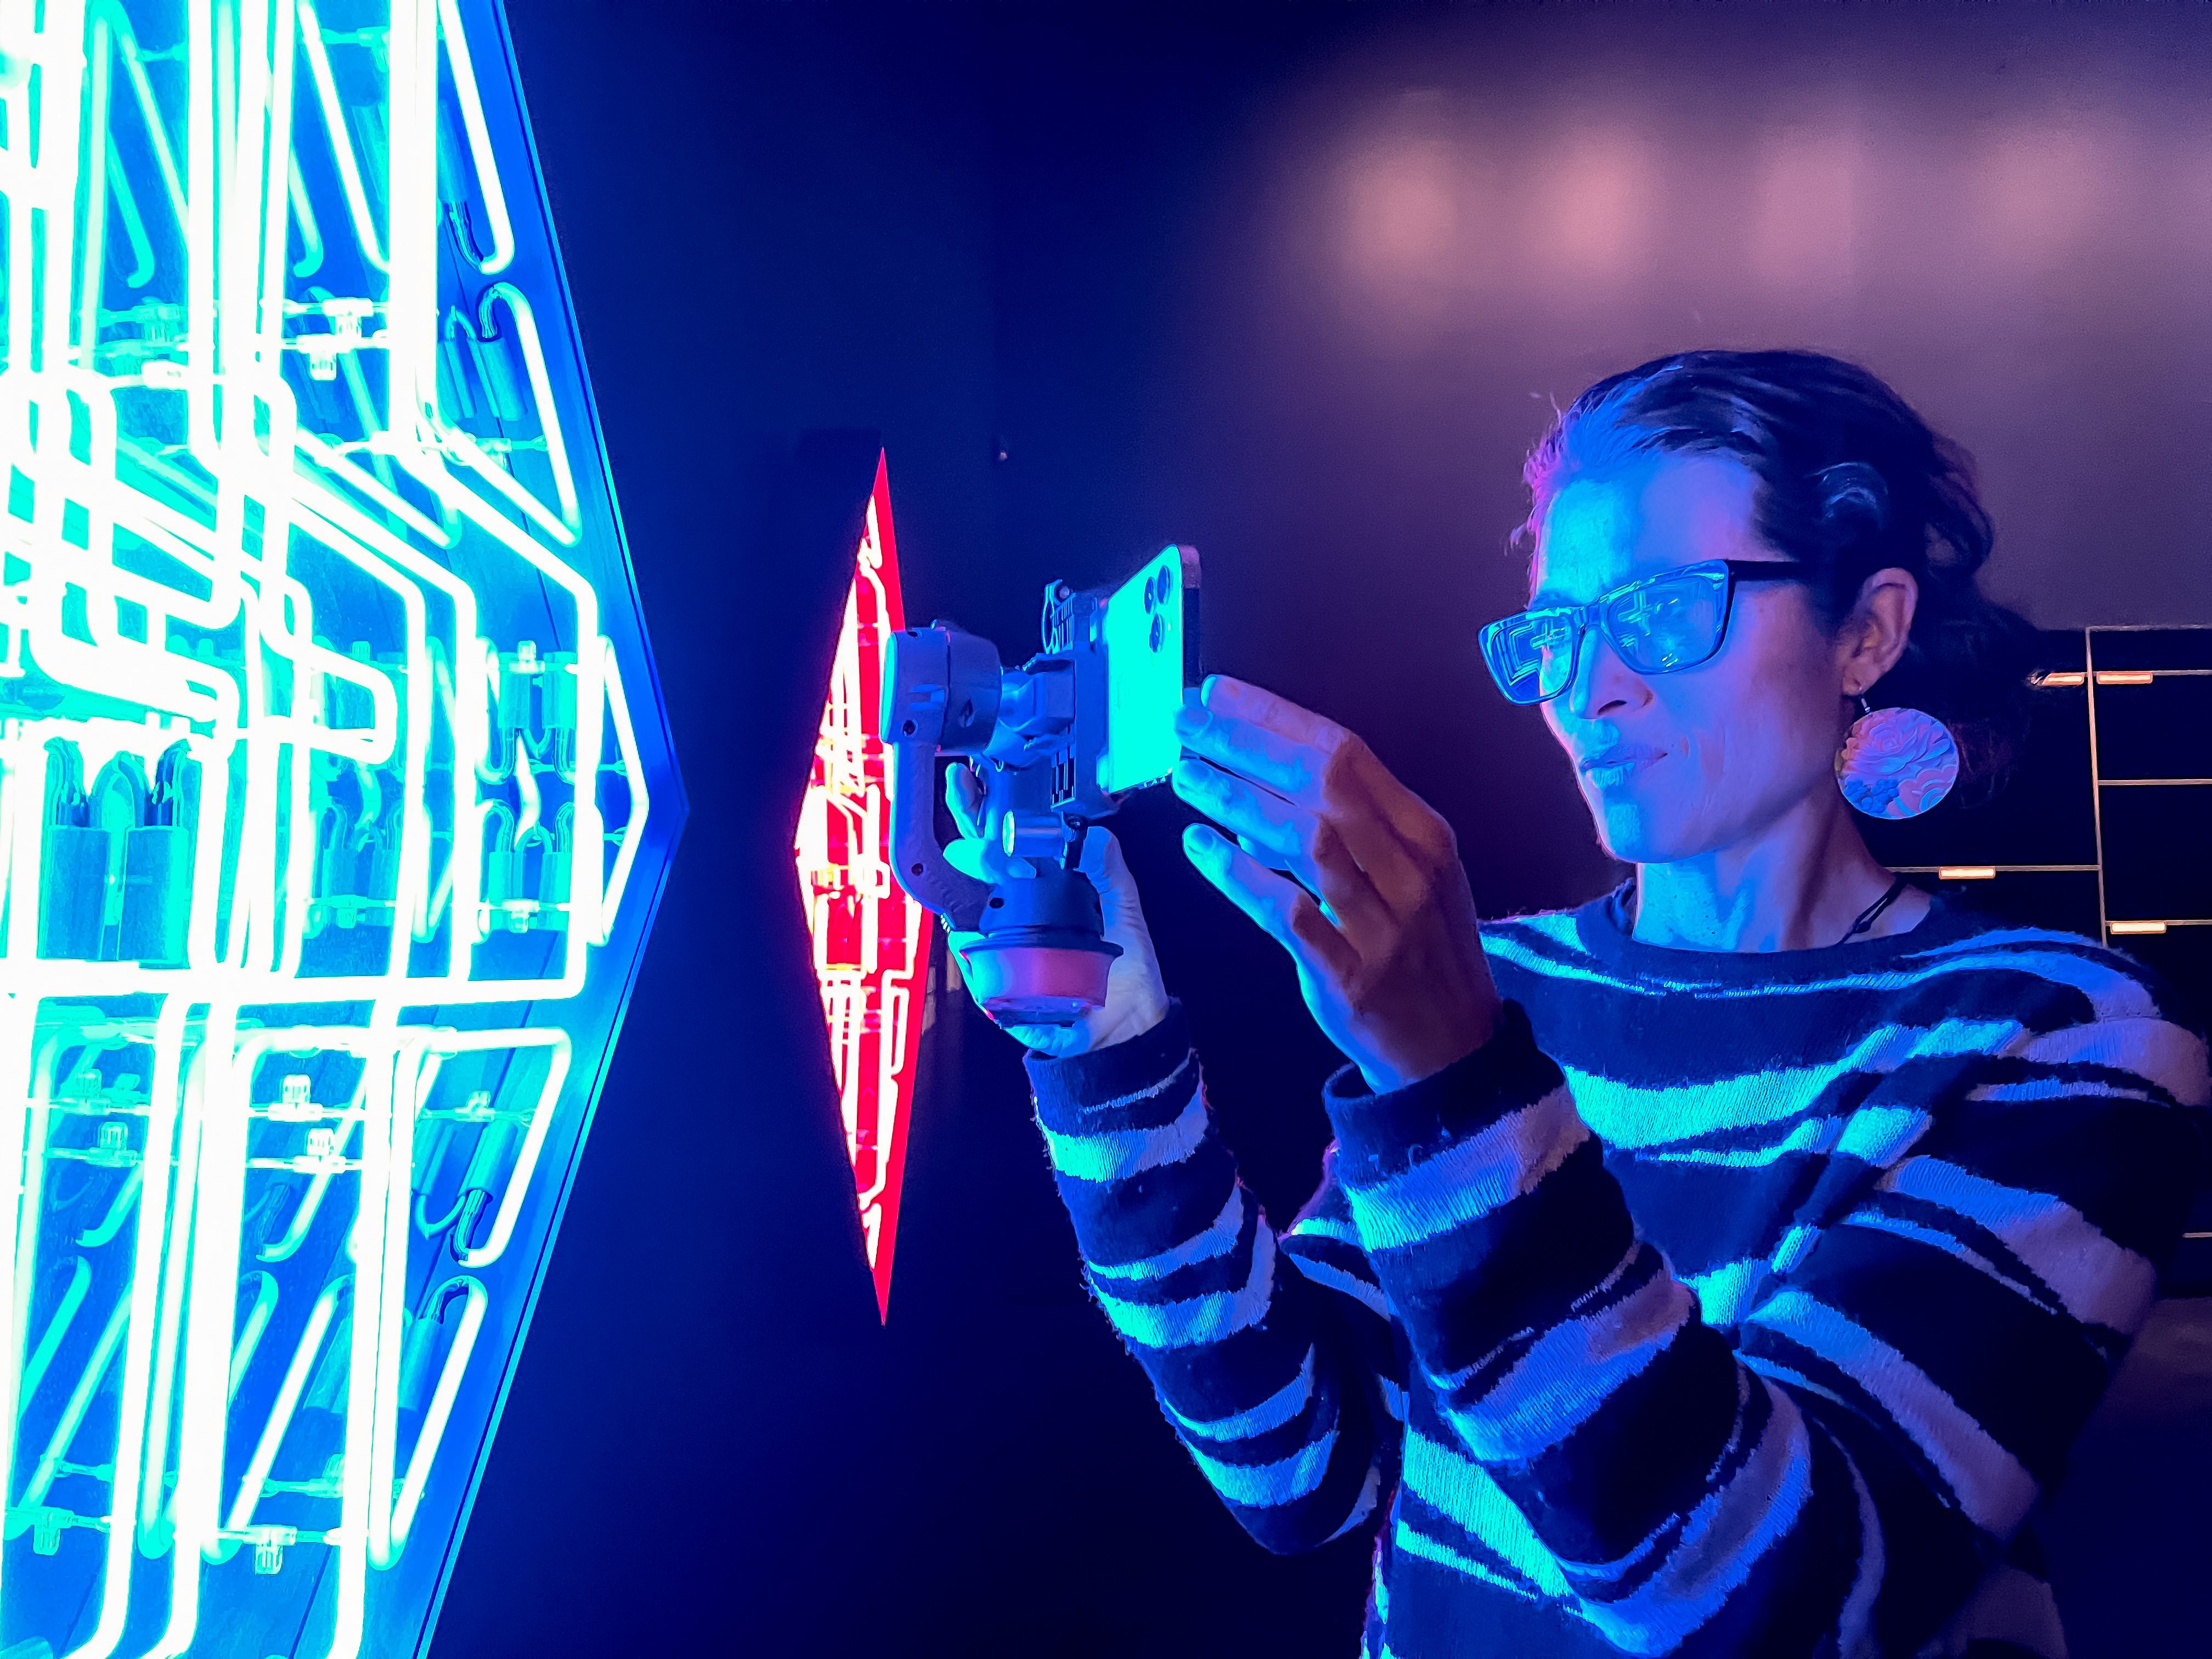 Chelsea Winstanley filming blue neon lights on an iPhone